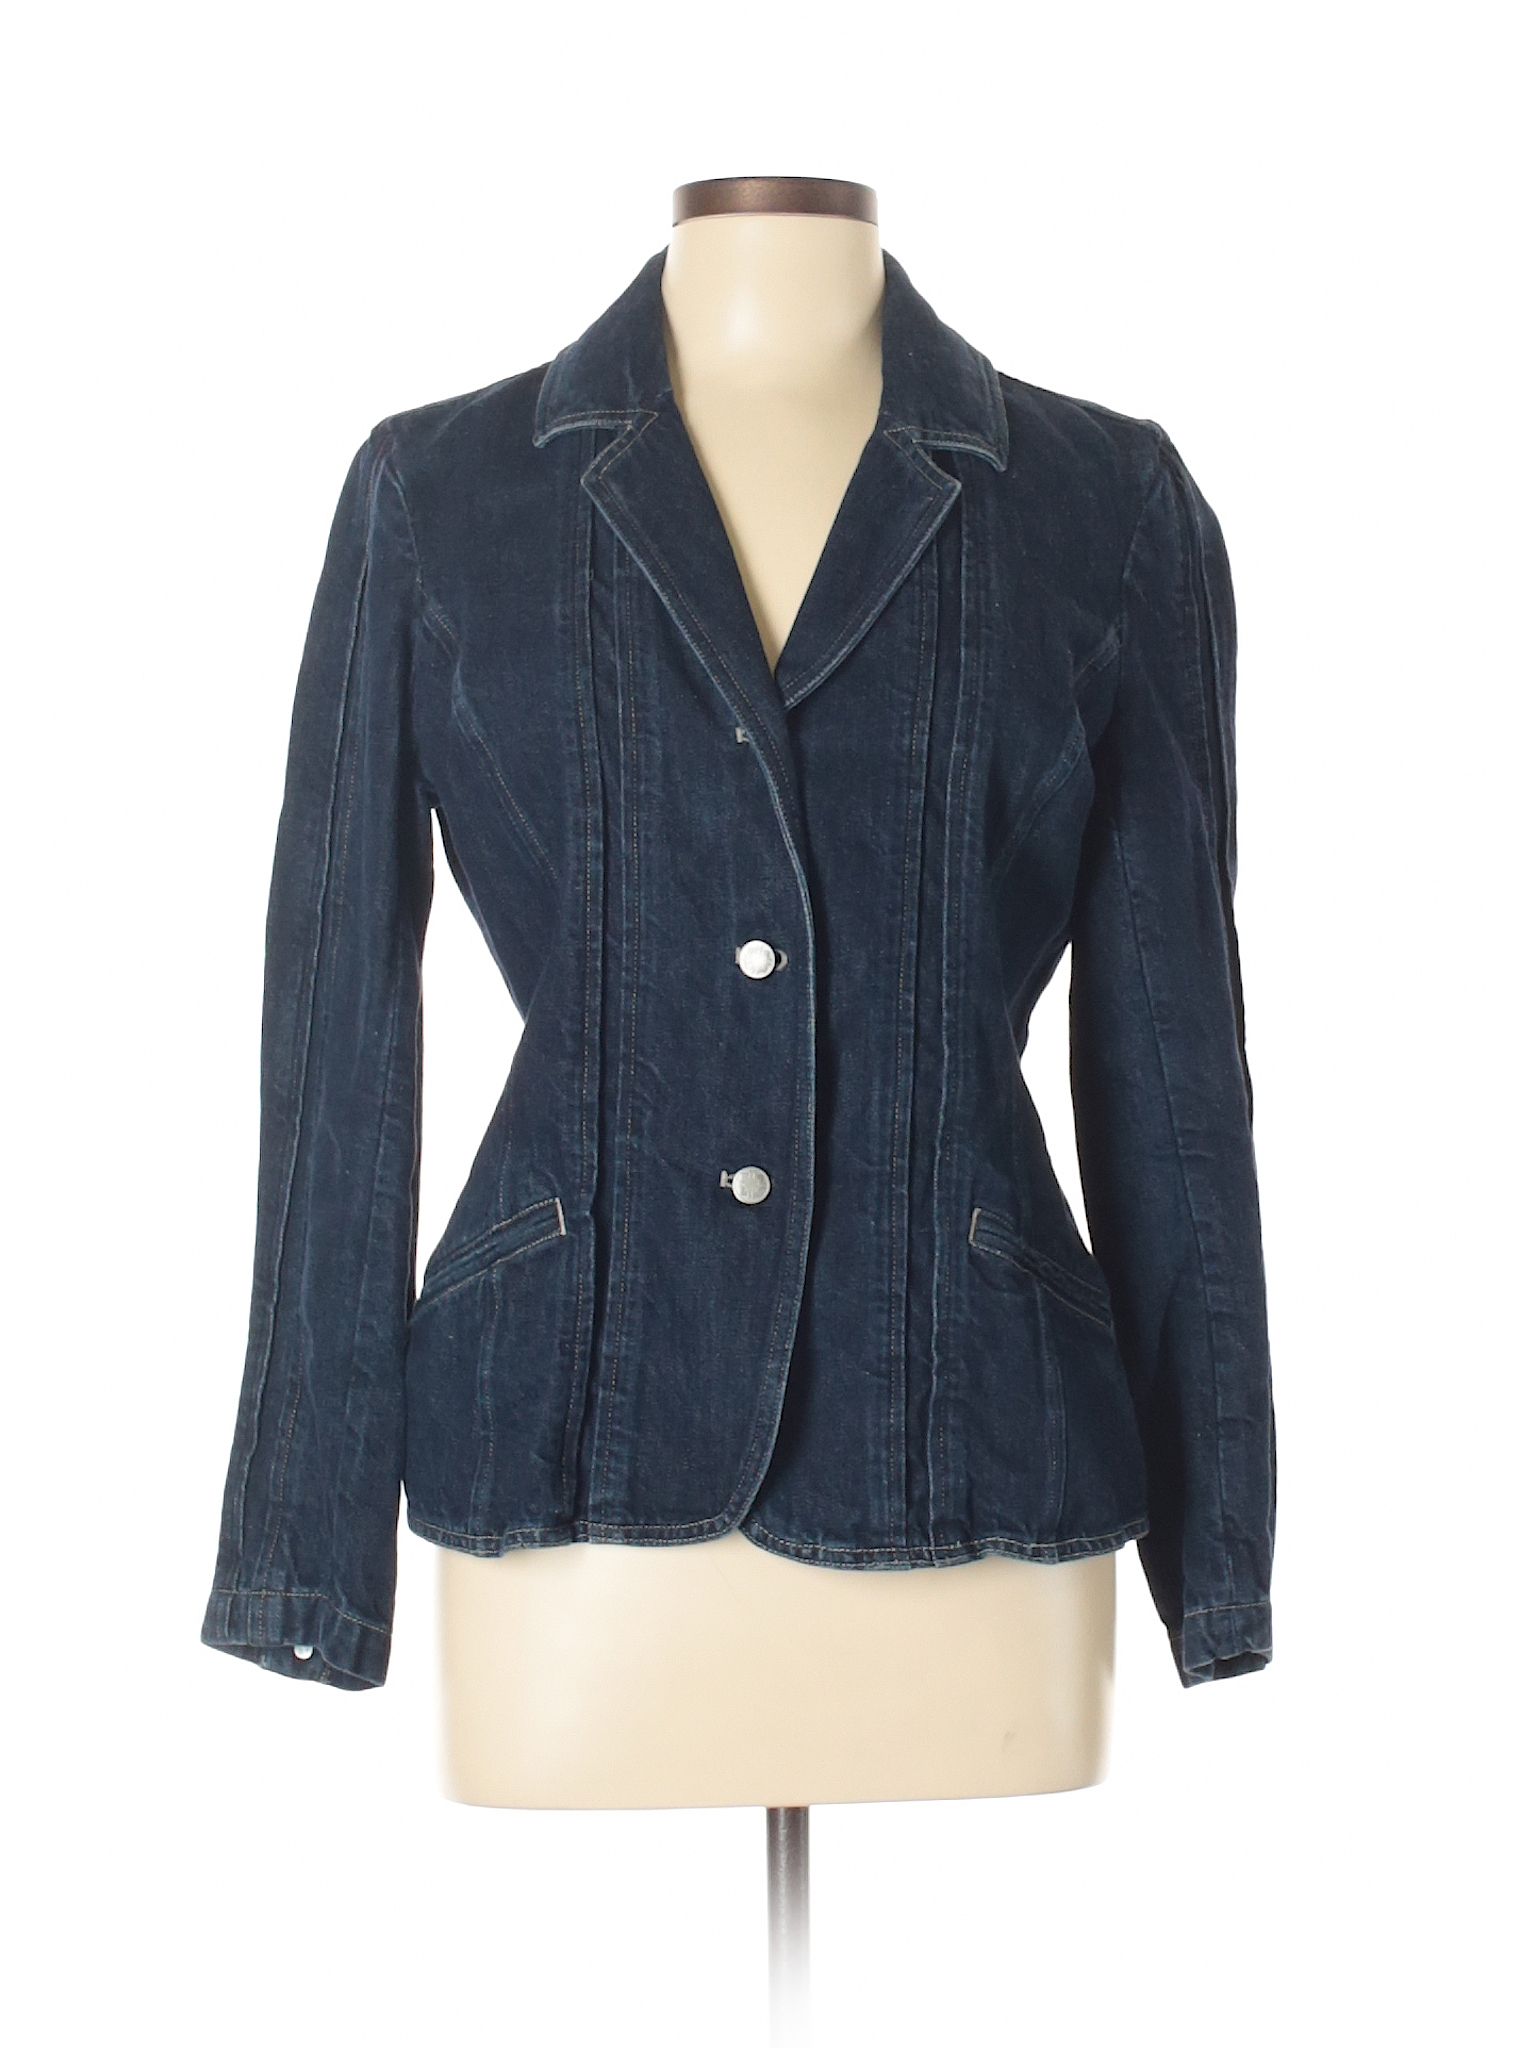 J.Jill 100% Cotton Solid Navy Blue Denim Jacket Size 10 - 85% off | thredUP